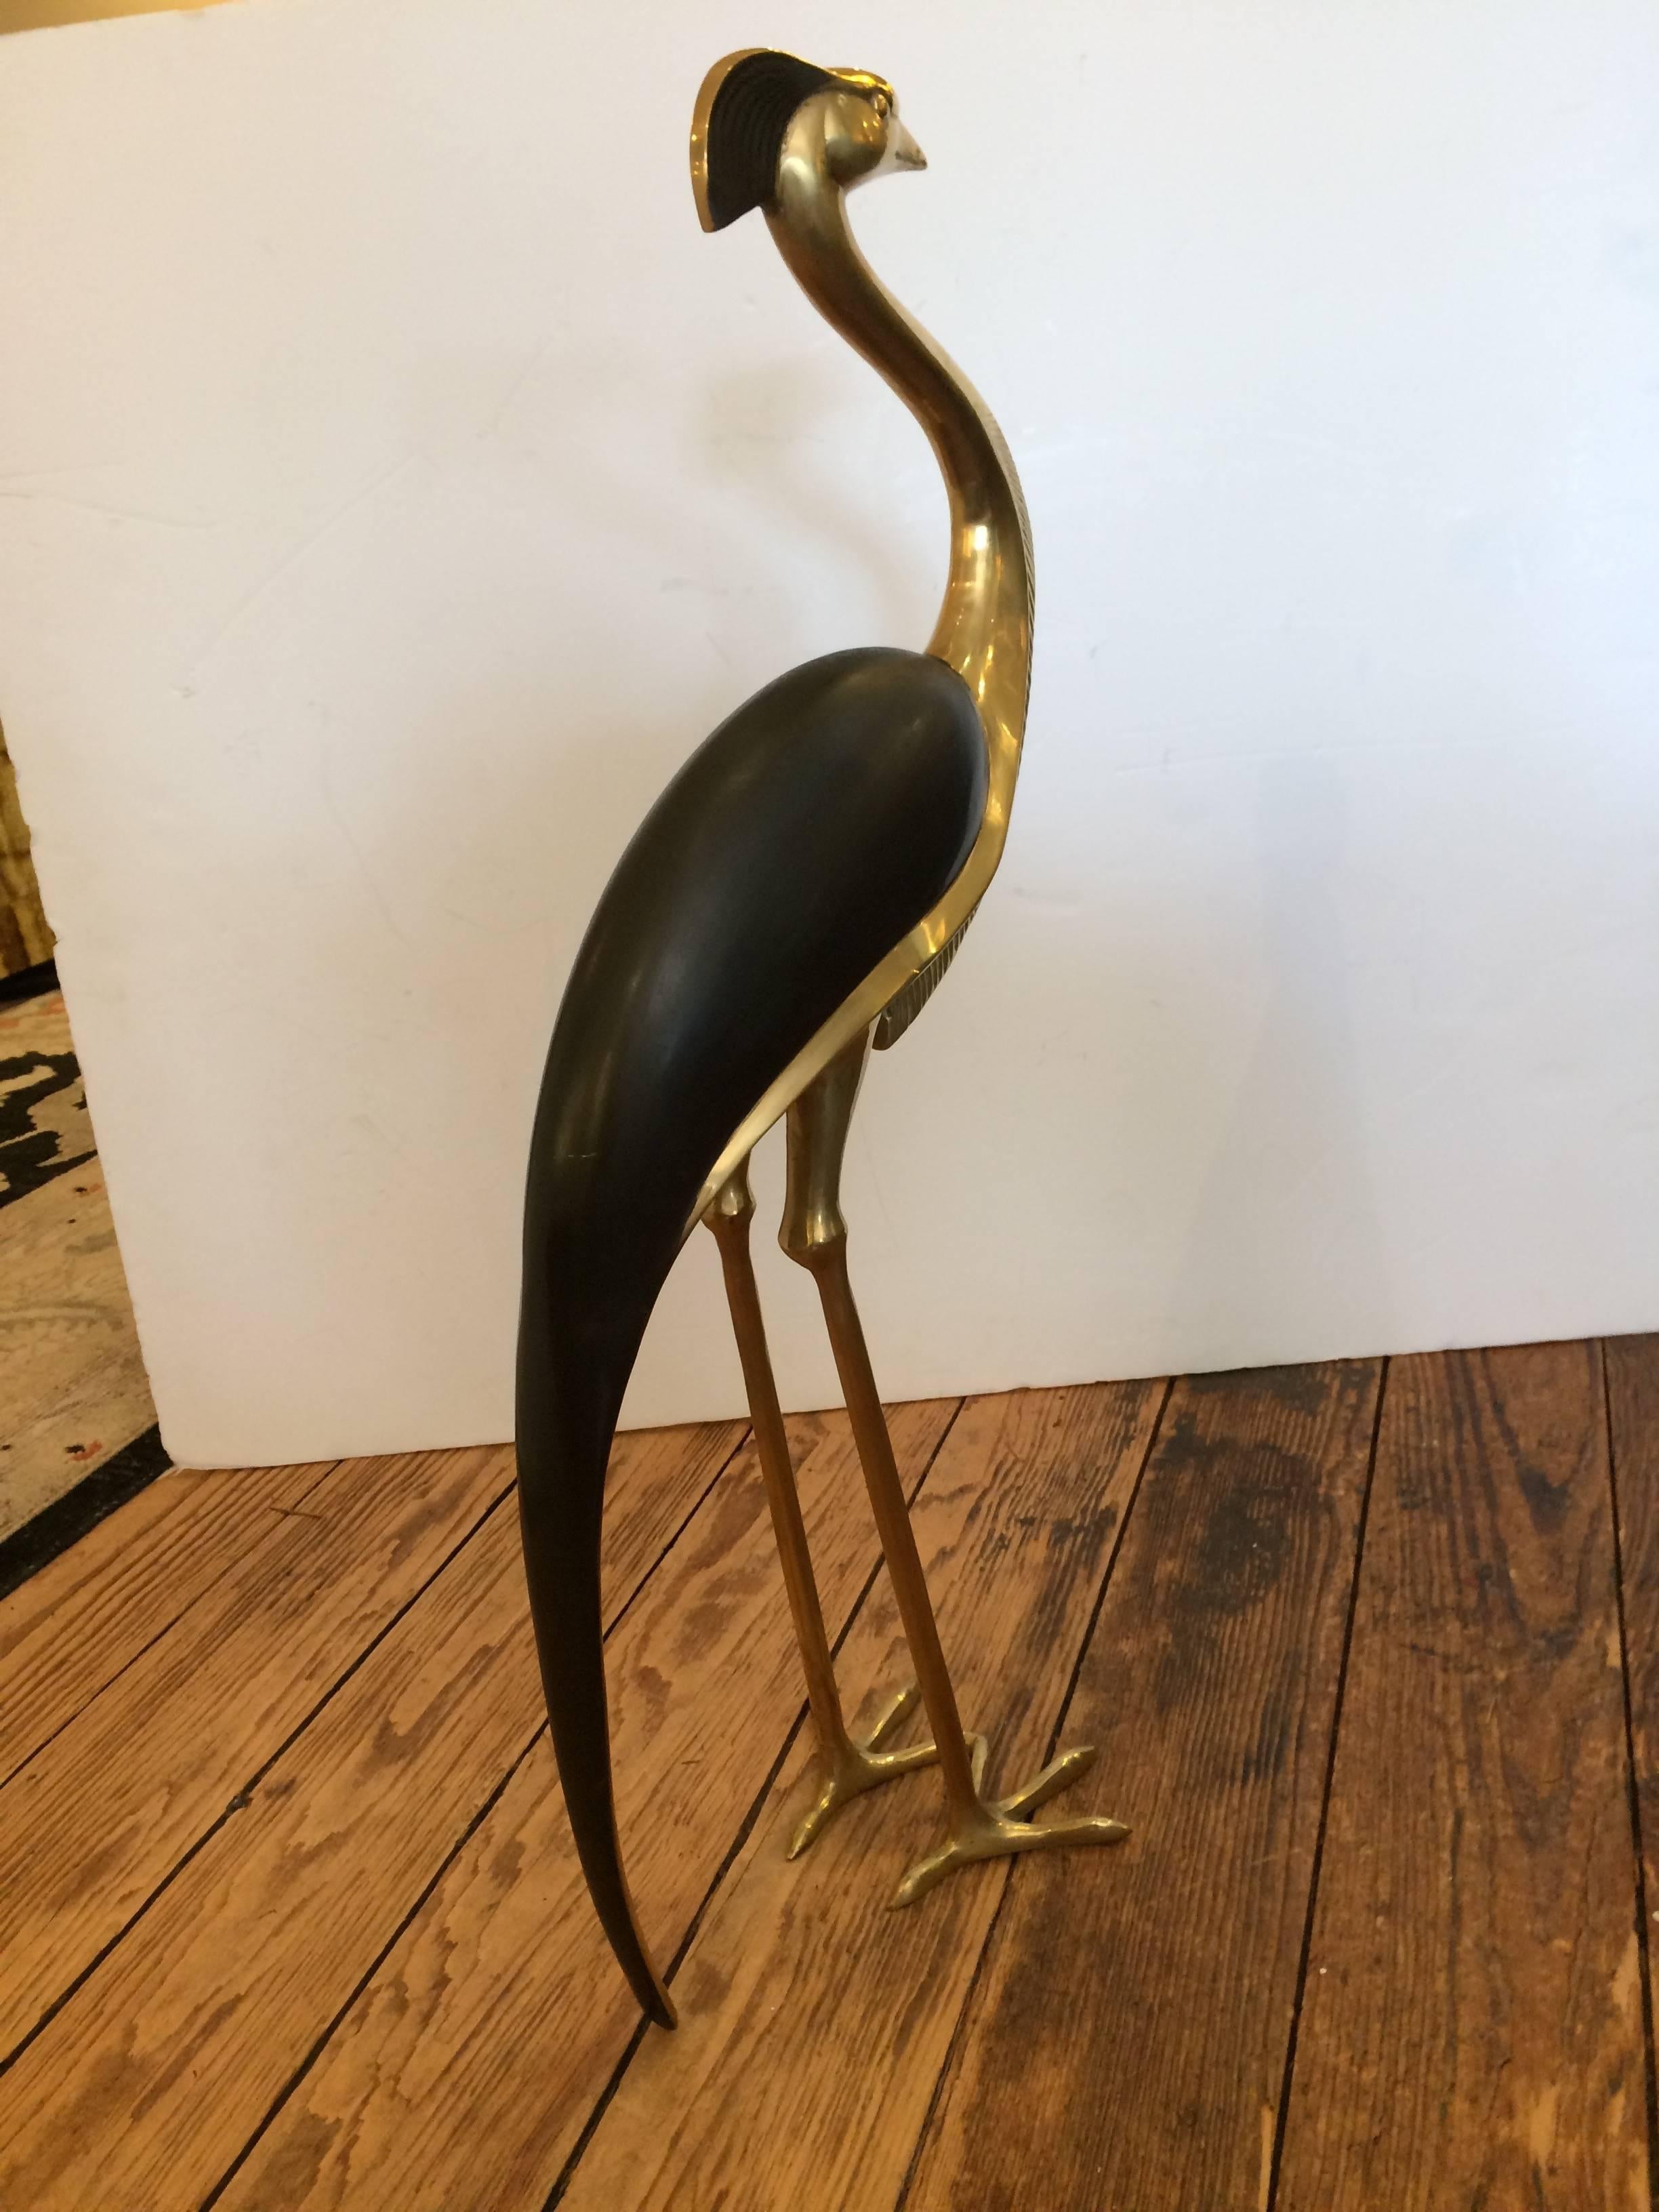 Eye catching very dramatic objet d'art, a brass and bronze stylized sculpture of a crane.